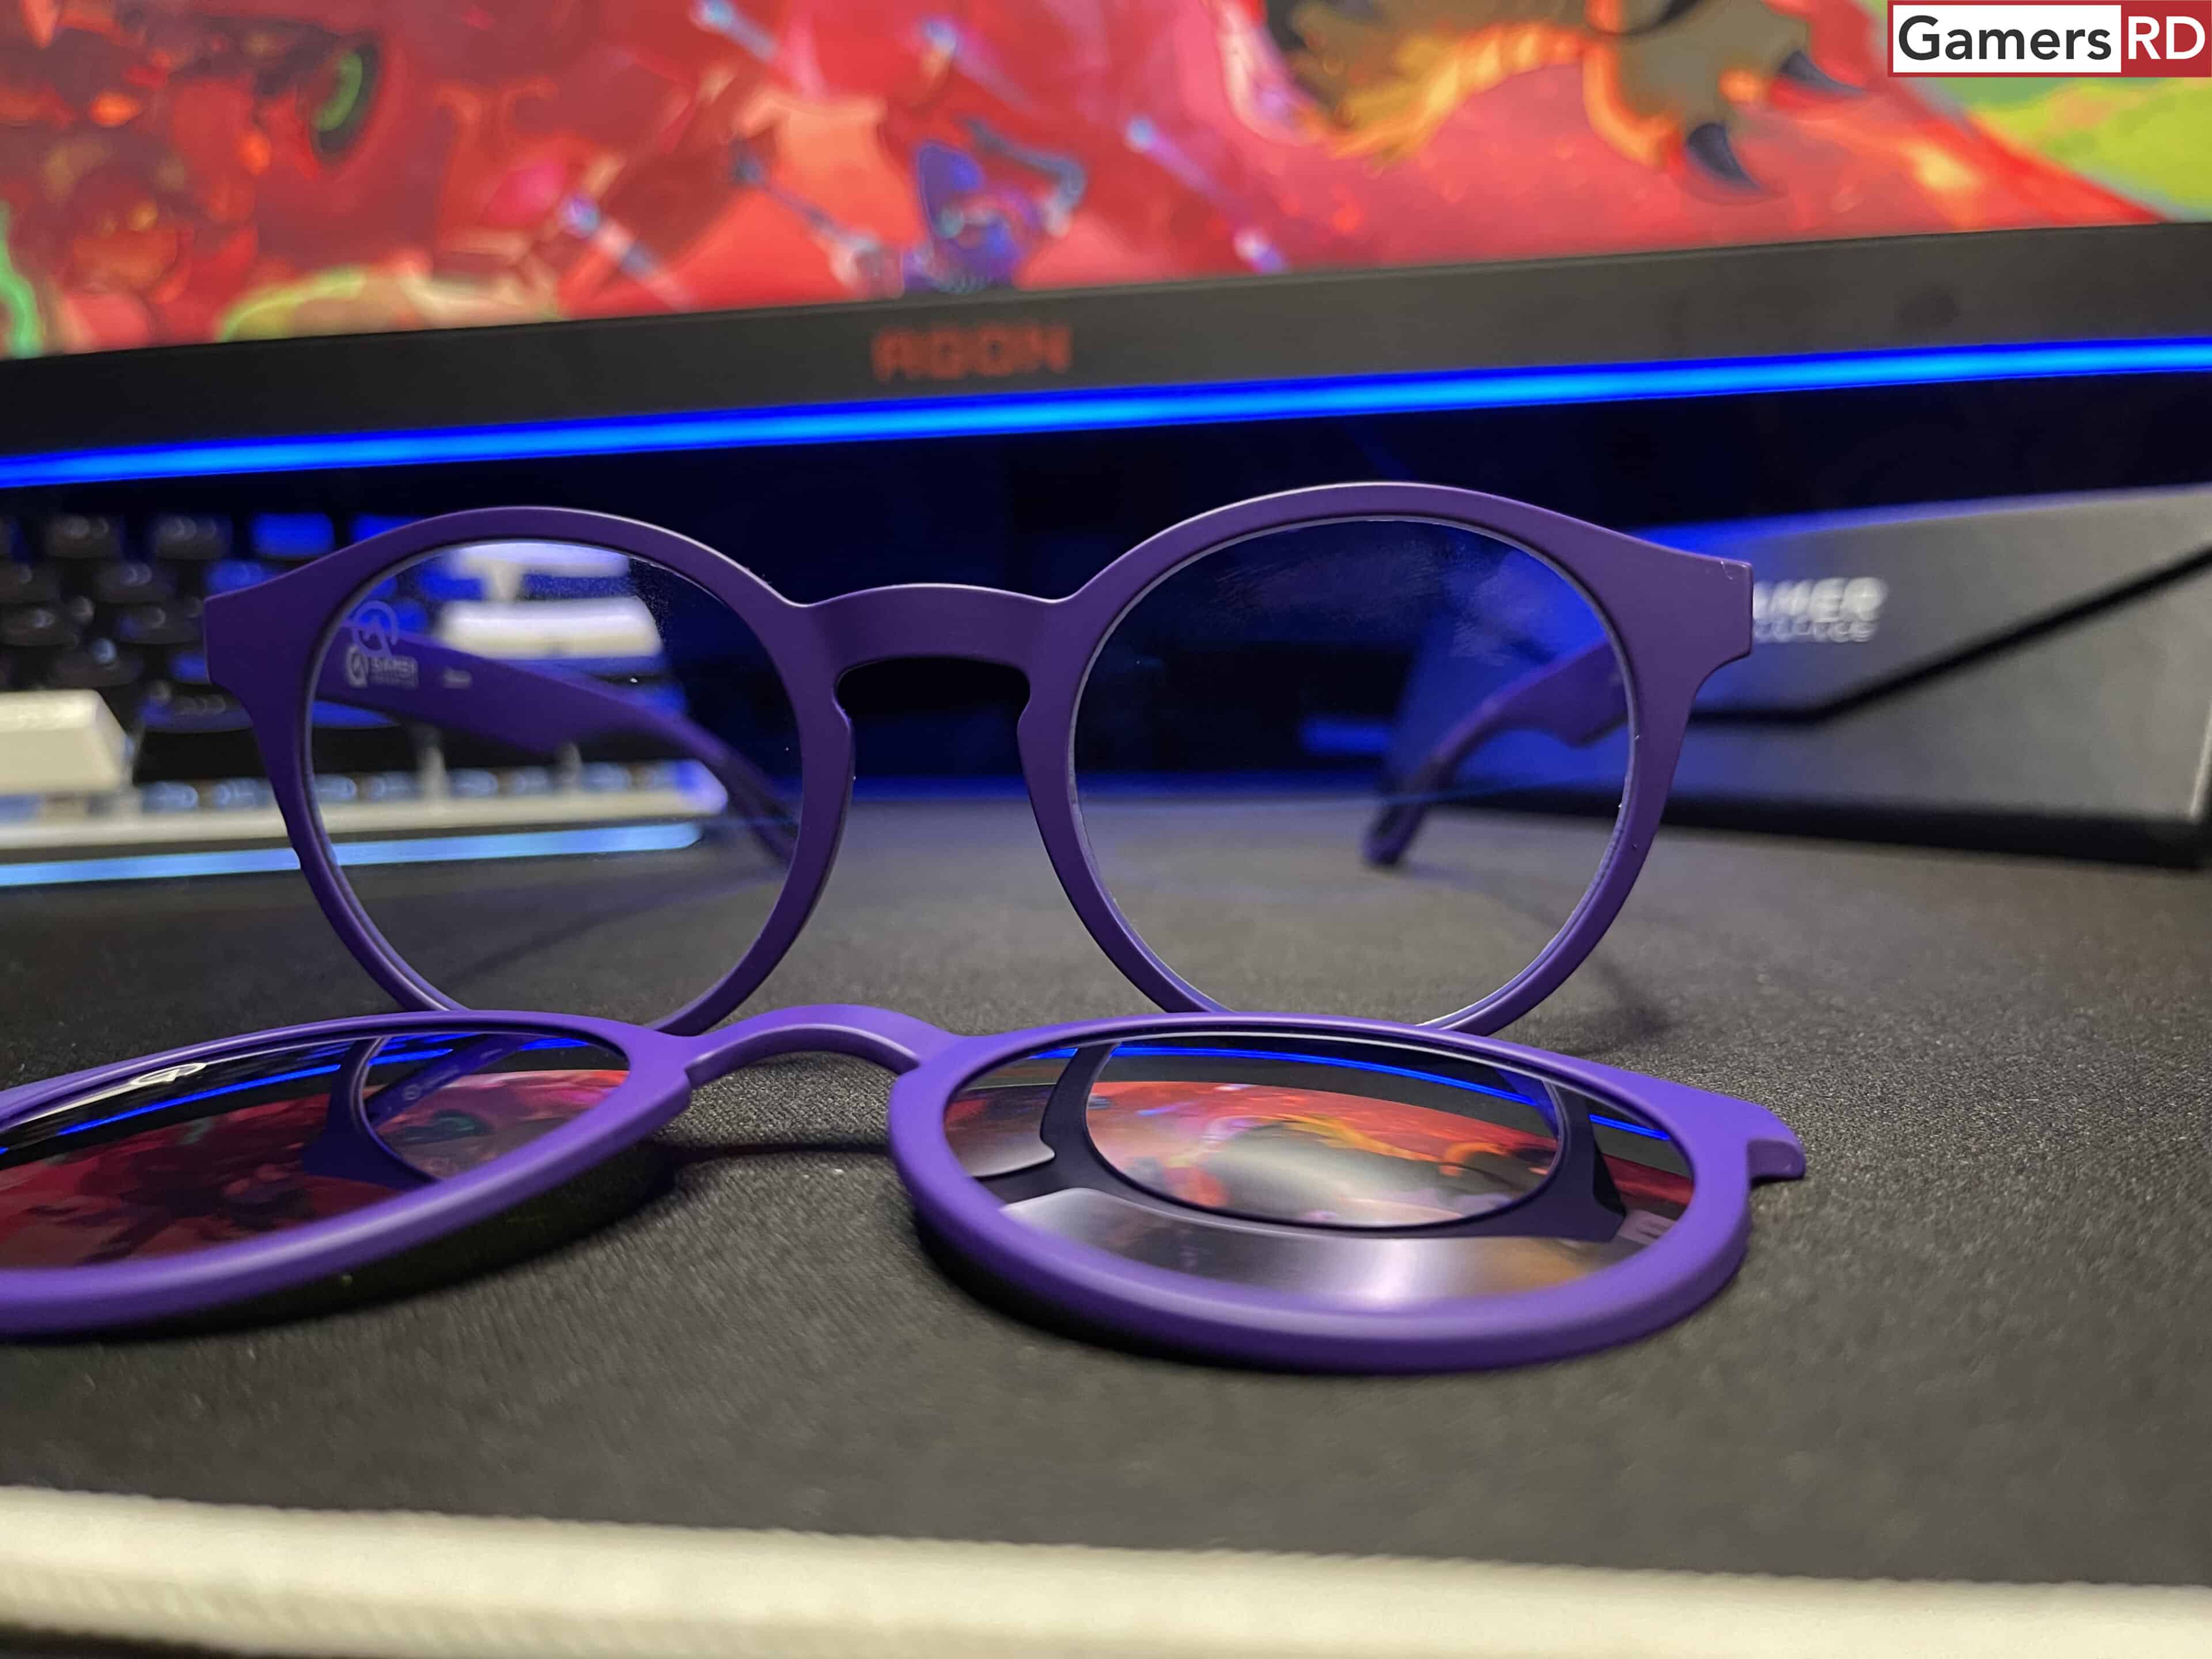 Gamer Advantage Storm Gaming Glasses - REZME Focus Review GamersRD8